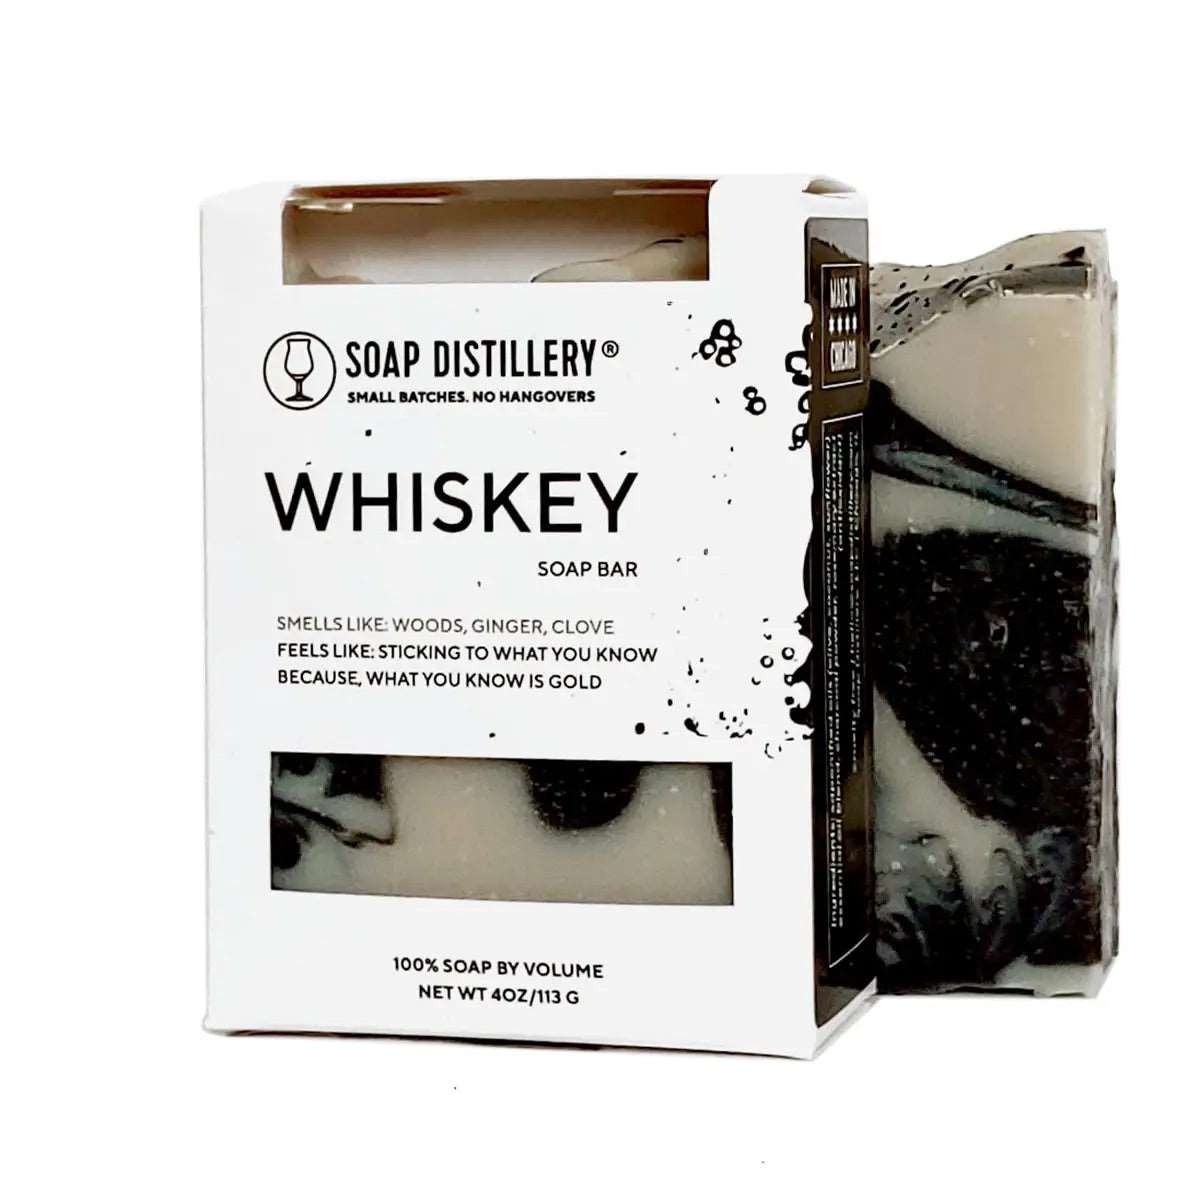 The Soap Distillery Whiskey Bar Soap